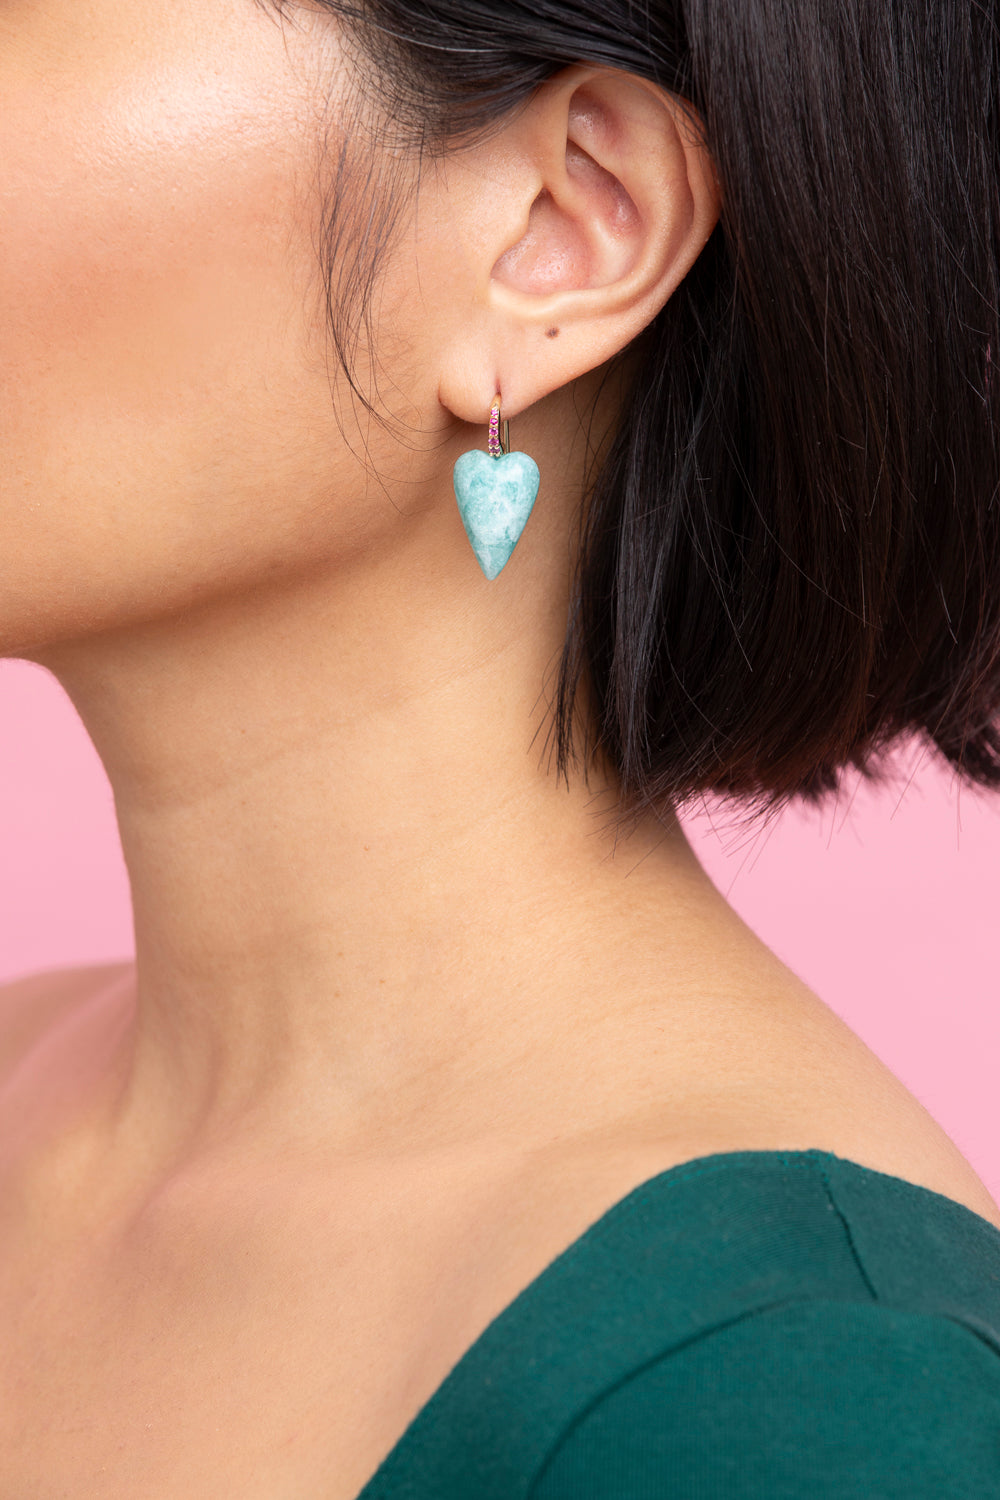 Rachel Quinn Jewelry amazonite 3-dimensional heart earring pair magenta sapphires on earring hoop on female model ear.